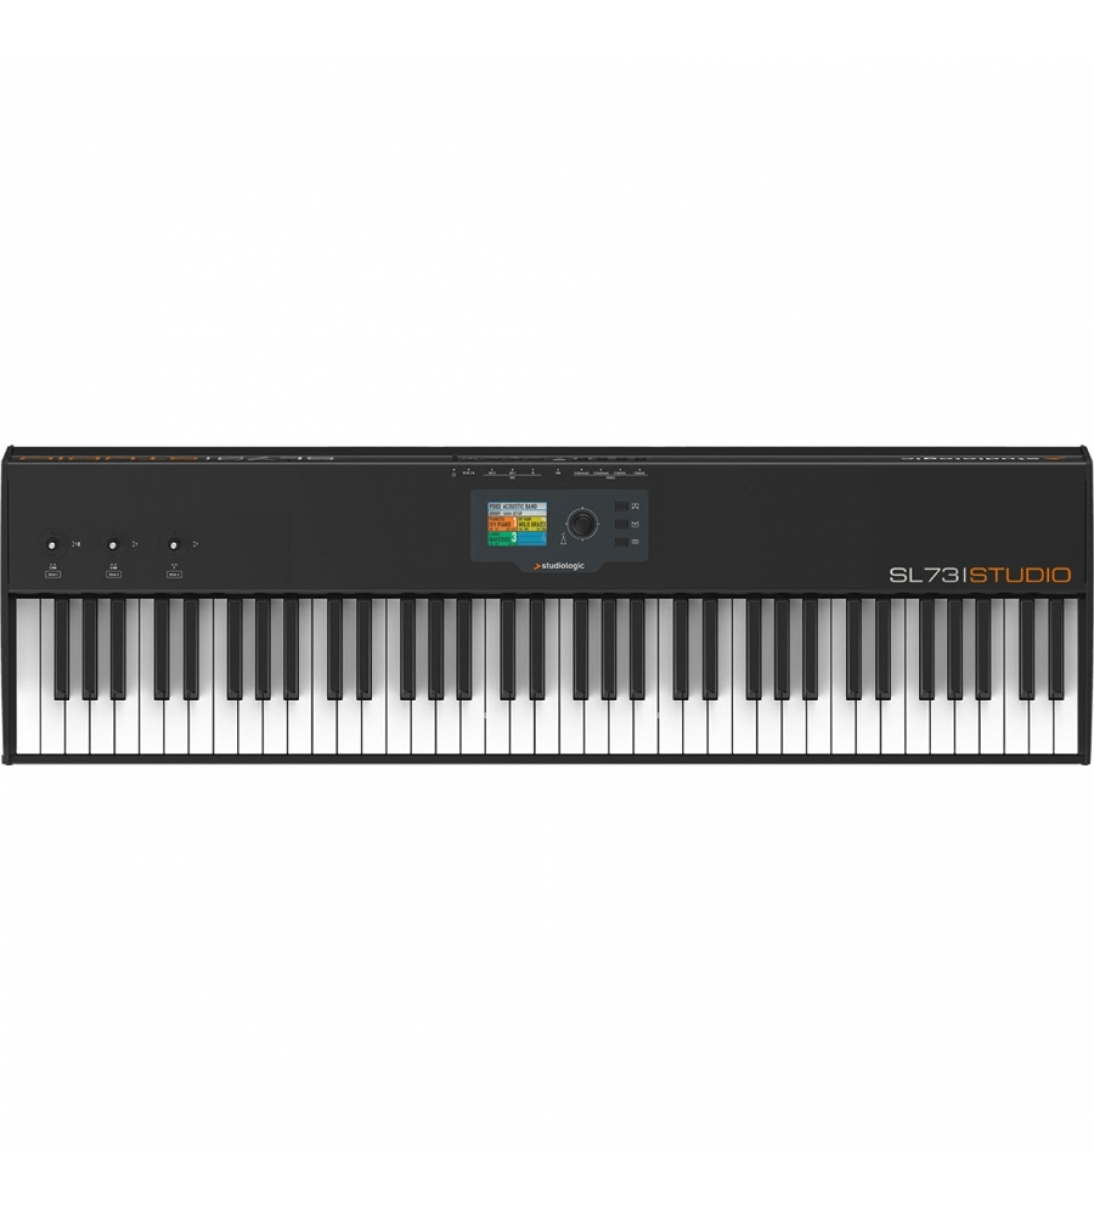 Studiologic SL73 STUDIO - MIDI Master Keyboard